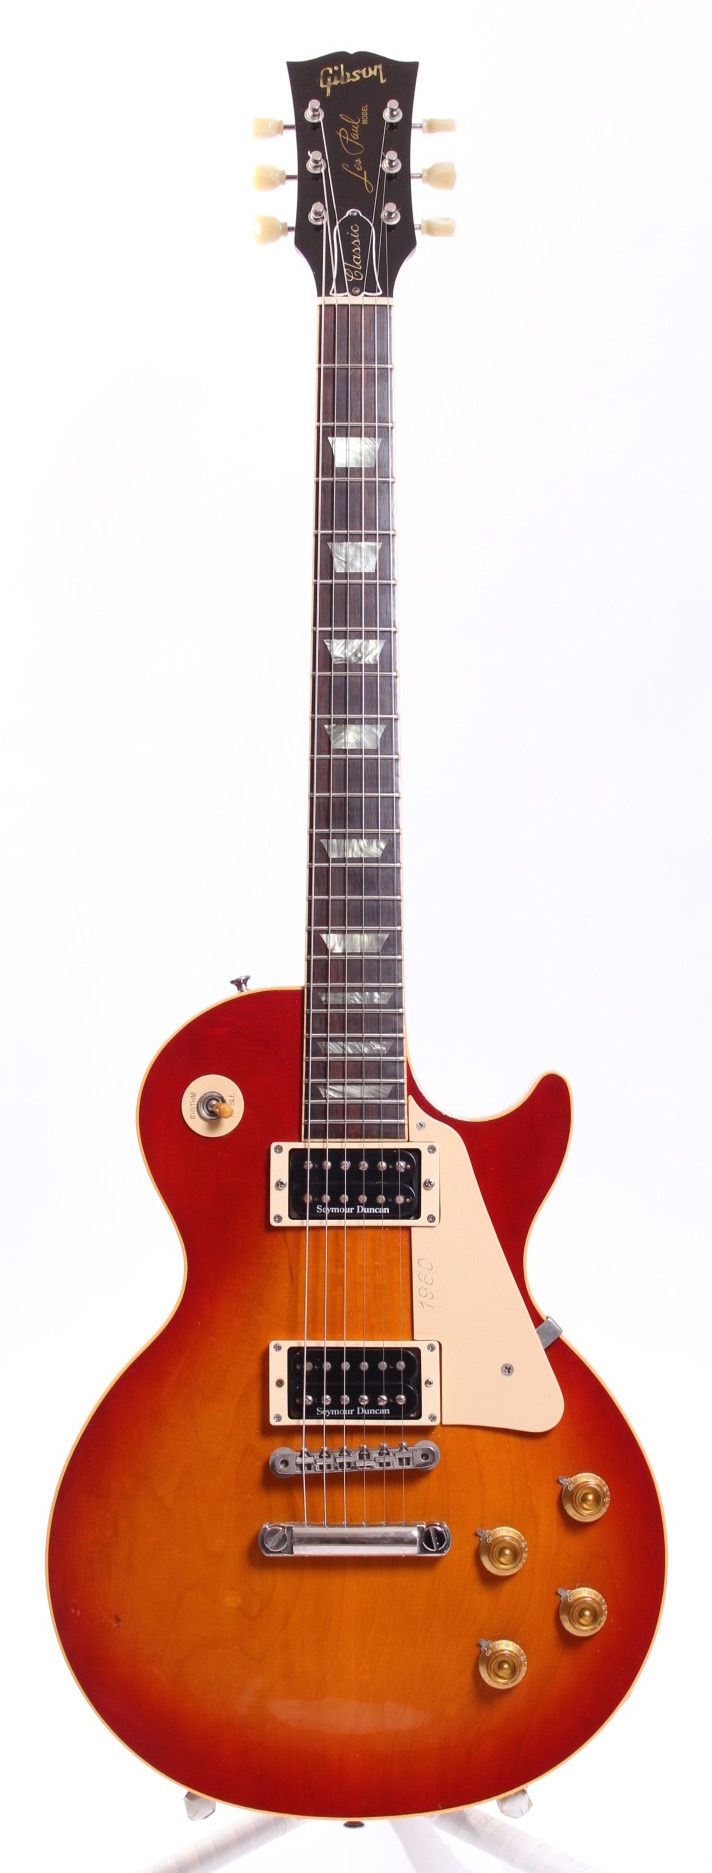 Gibson Les Paul Classic 1990 Heritage Cherry Sunburst Guitar For Sale Yeahmans Guitars 0300